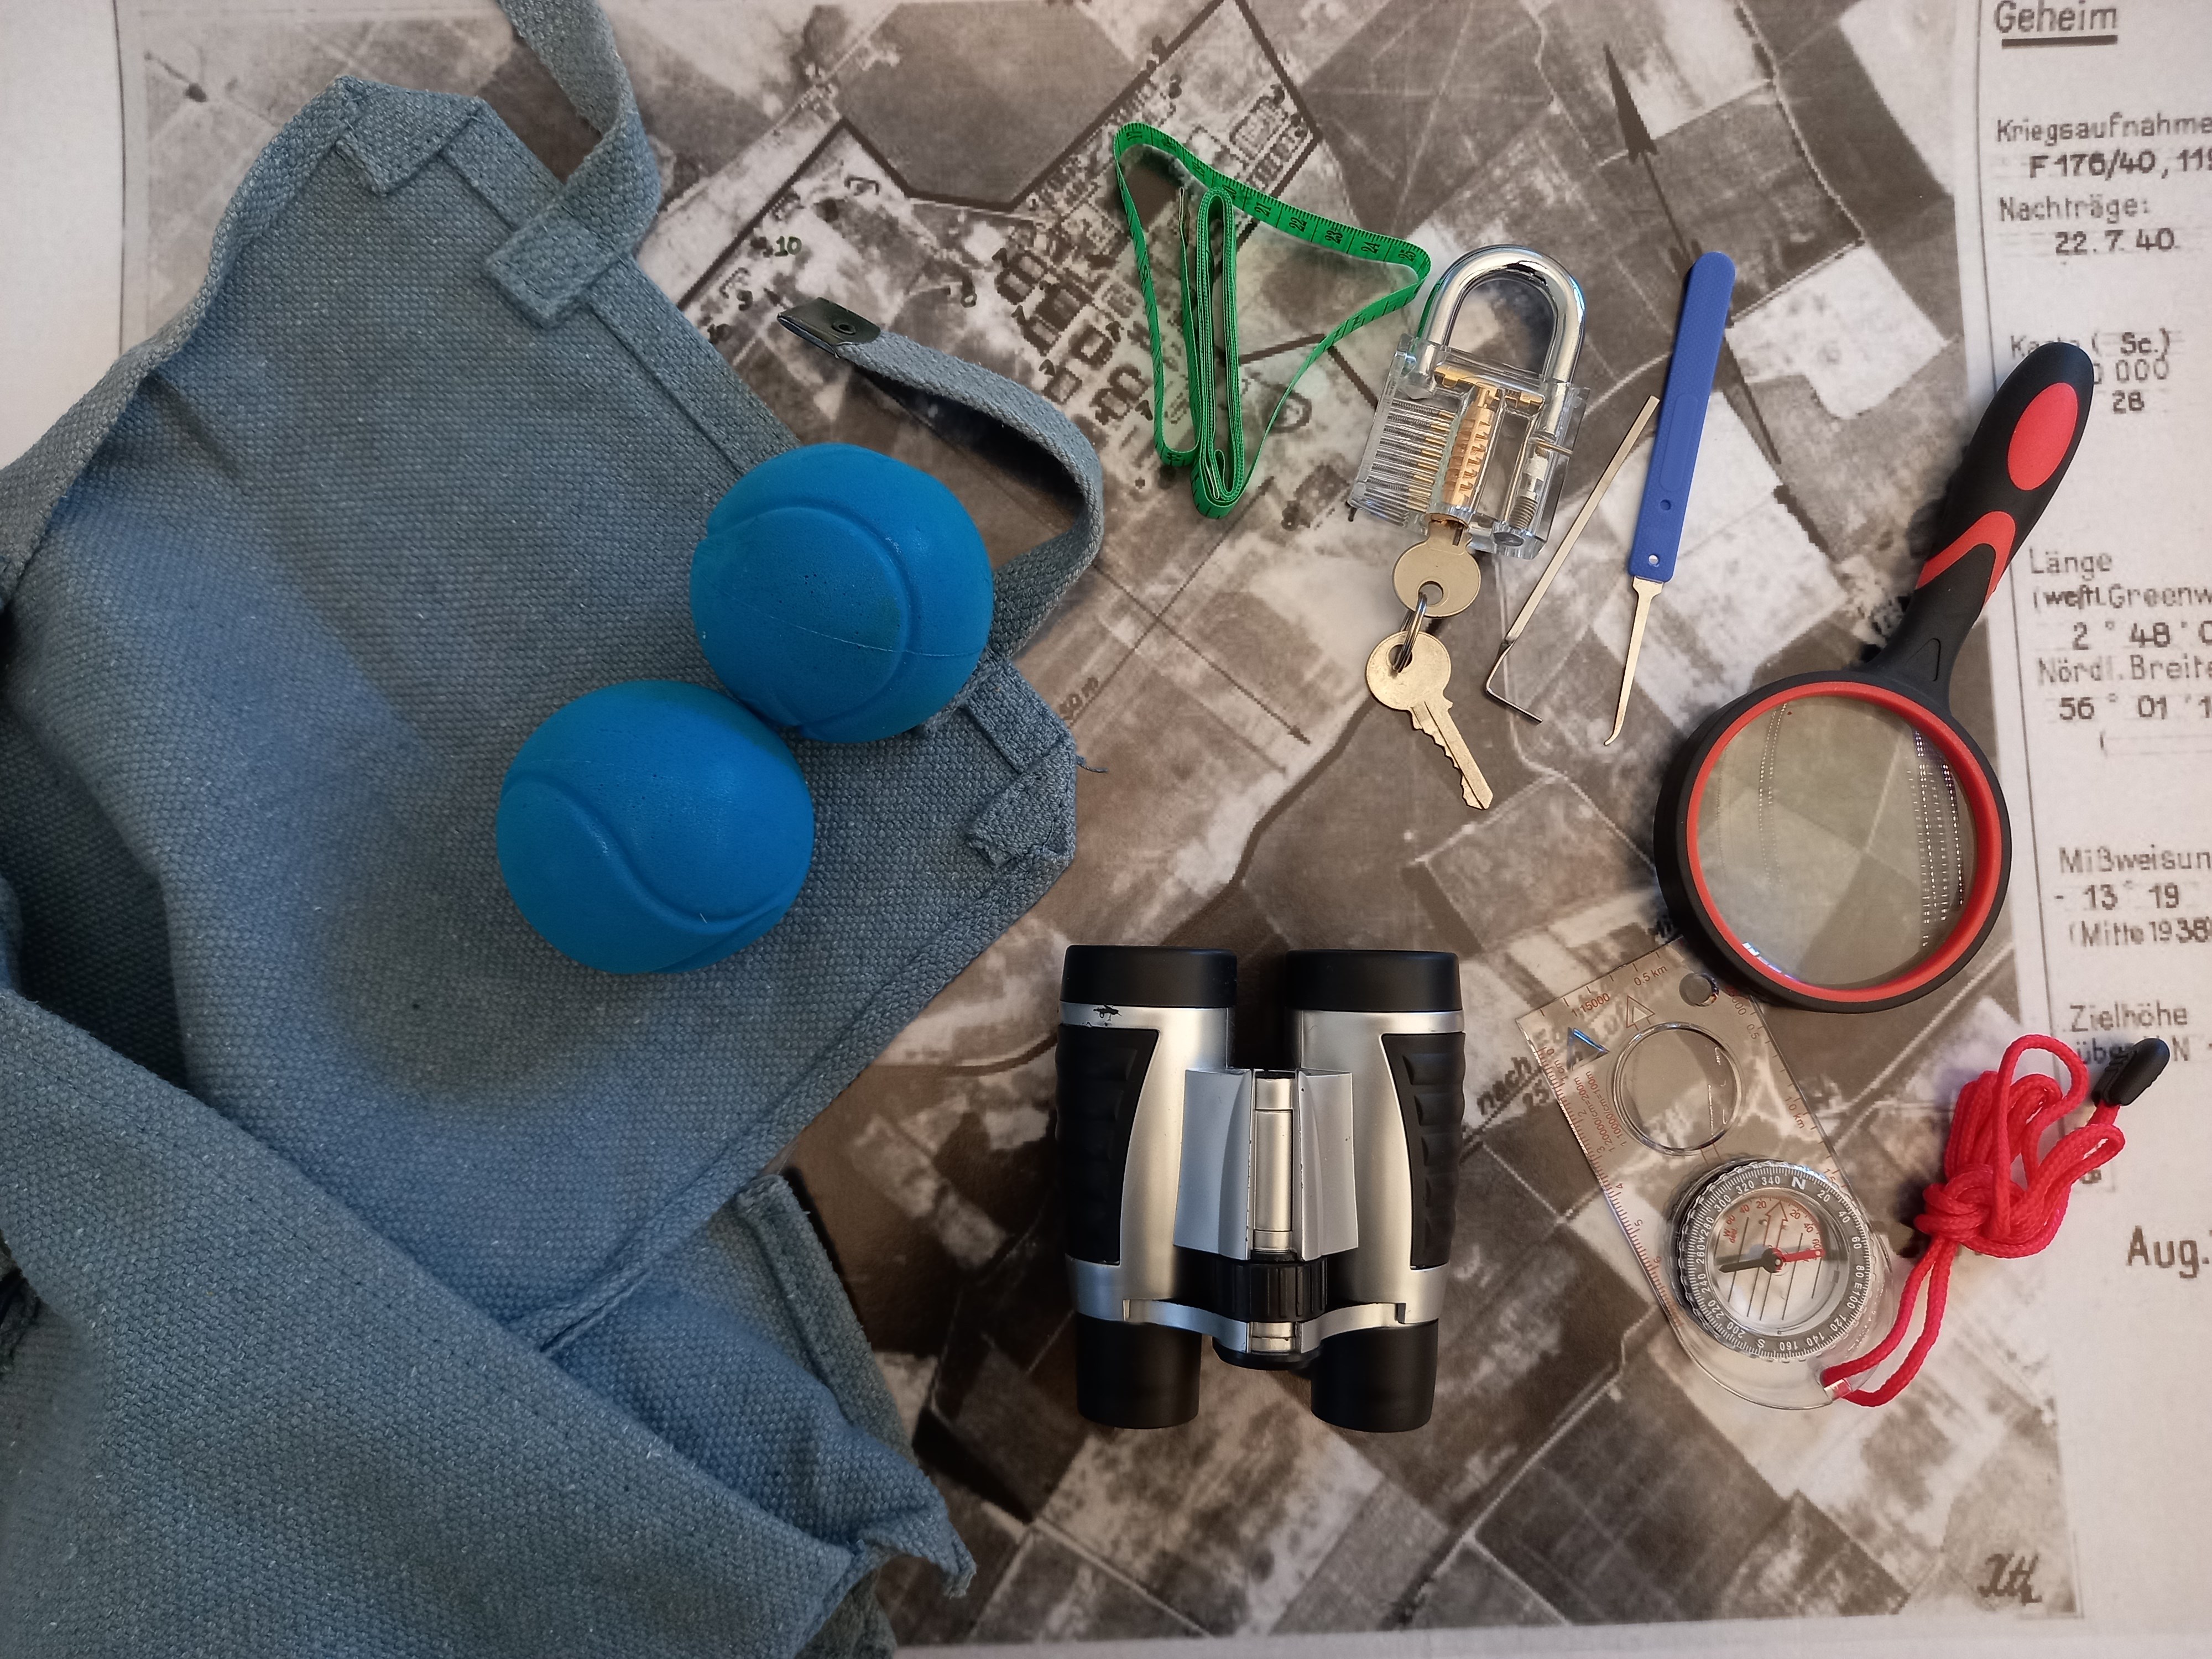 Blue tennis balls, binoculars, magnifying glass, compass and lock and key lie beside blue satchel bag.